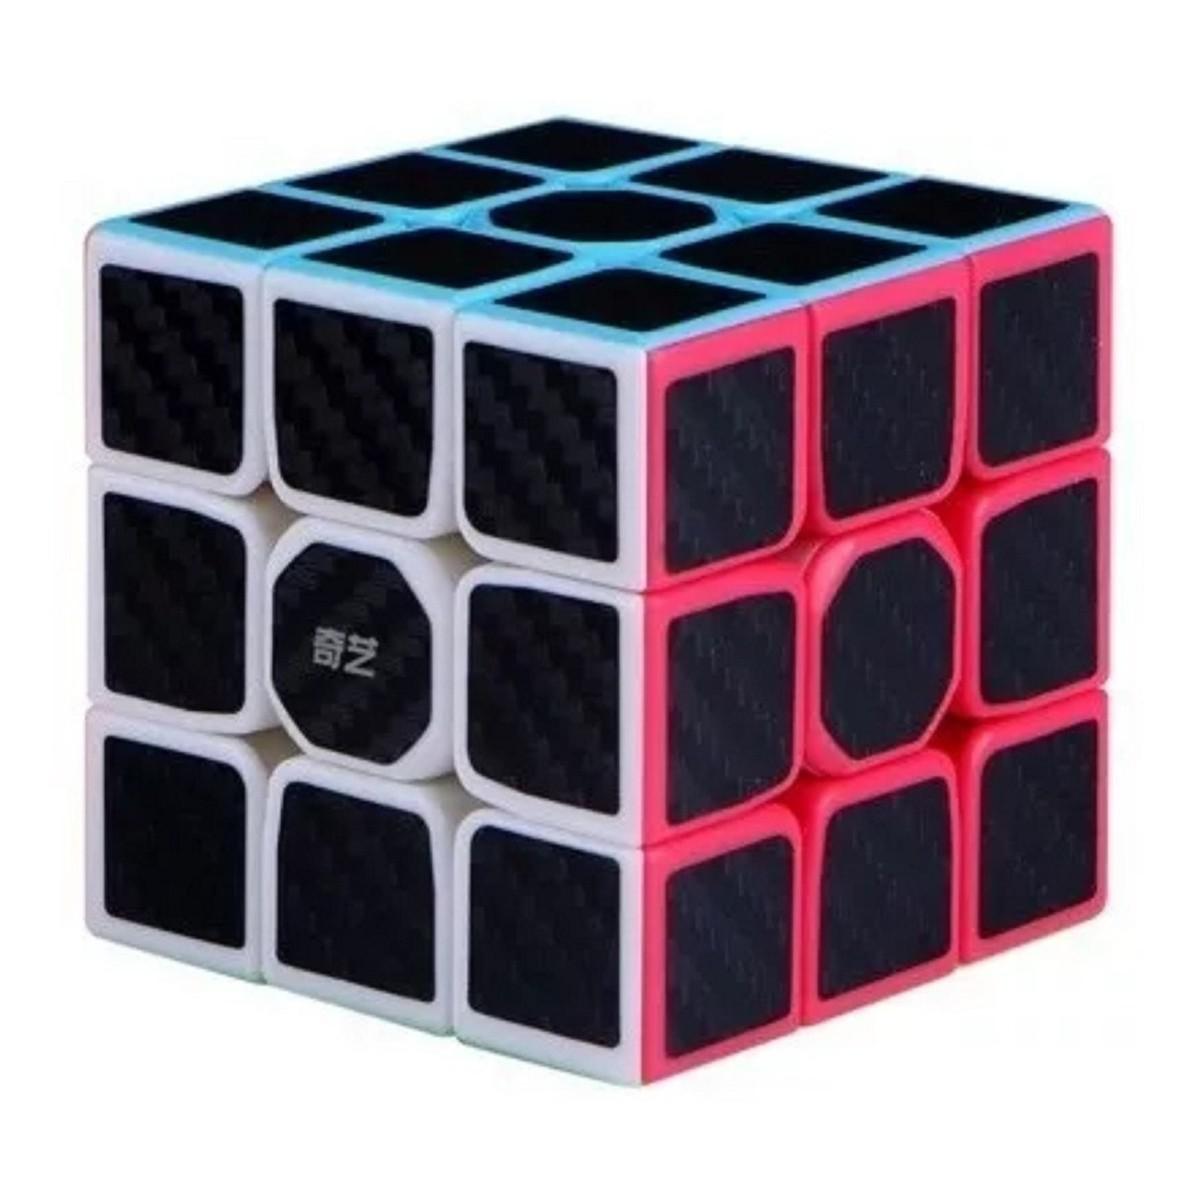 Cubo Mágico Cuber Pro 3 Carbon - RioMar Fortaleza Online